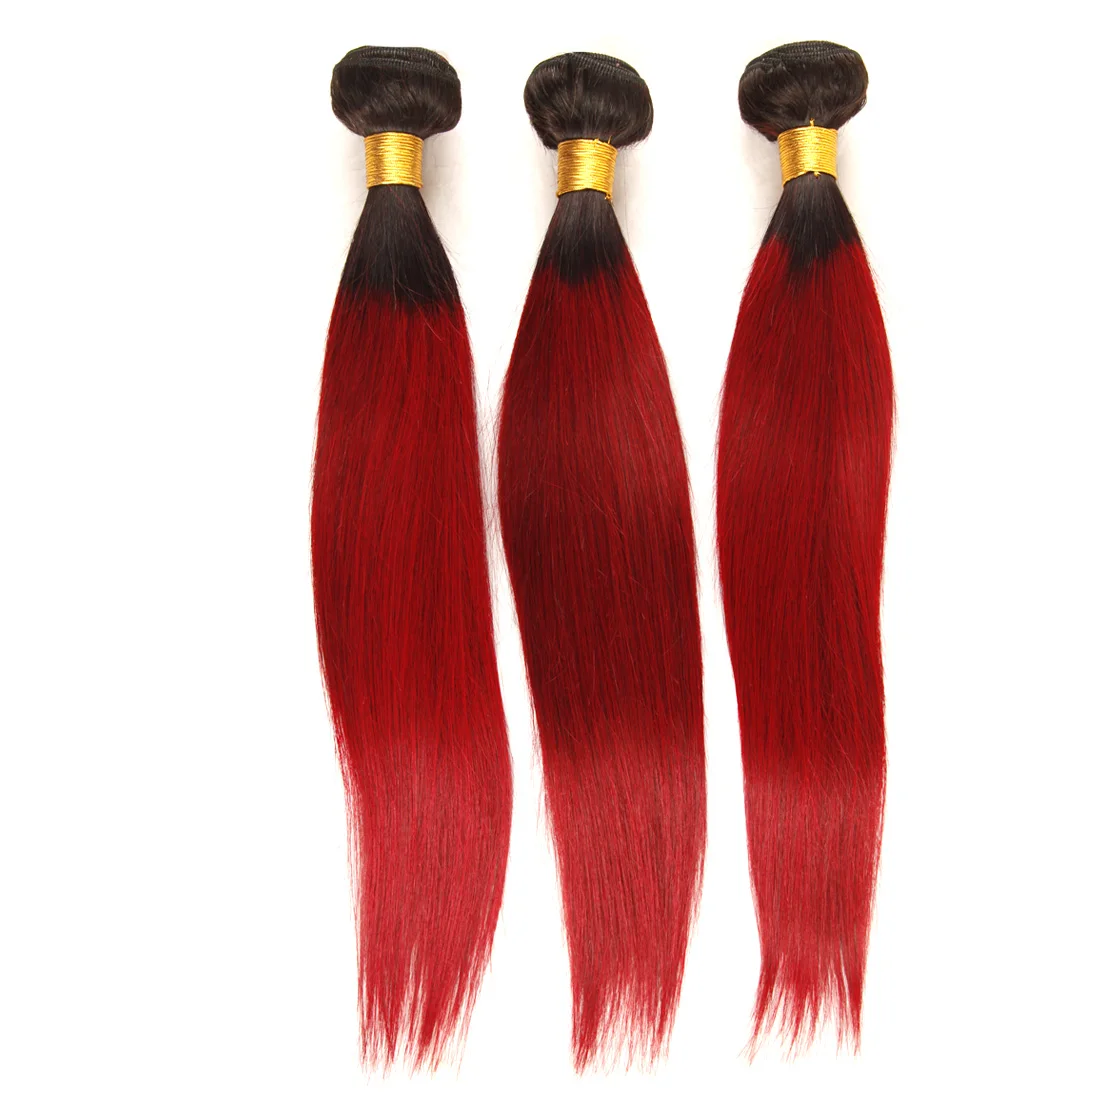 Wholesale raw min-k virgin brazilian hair bundles,wholesale bundle virgin hair vendors,raw brazilian virgin cuticle aligned hair